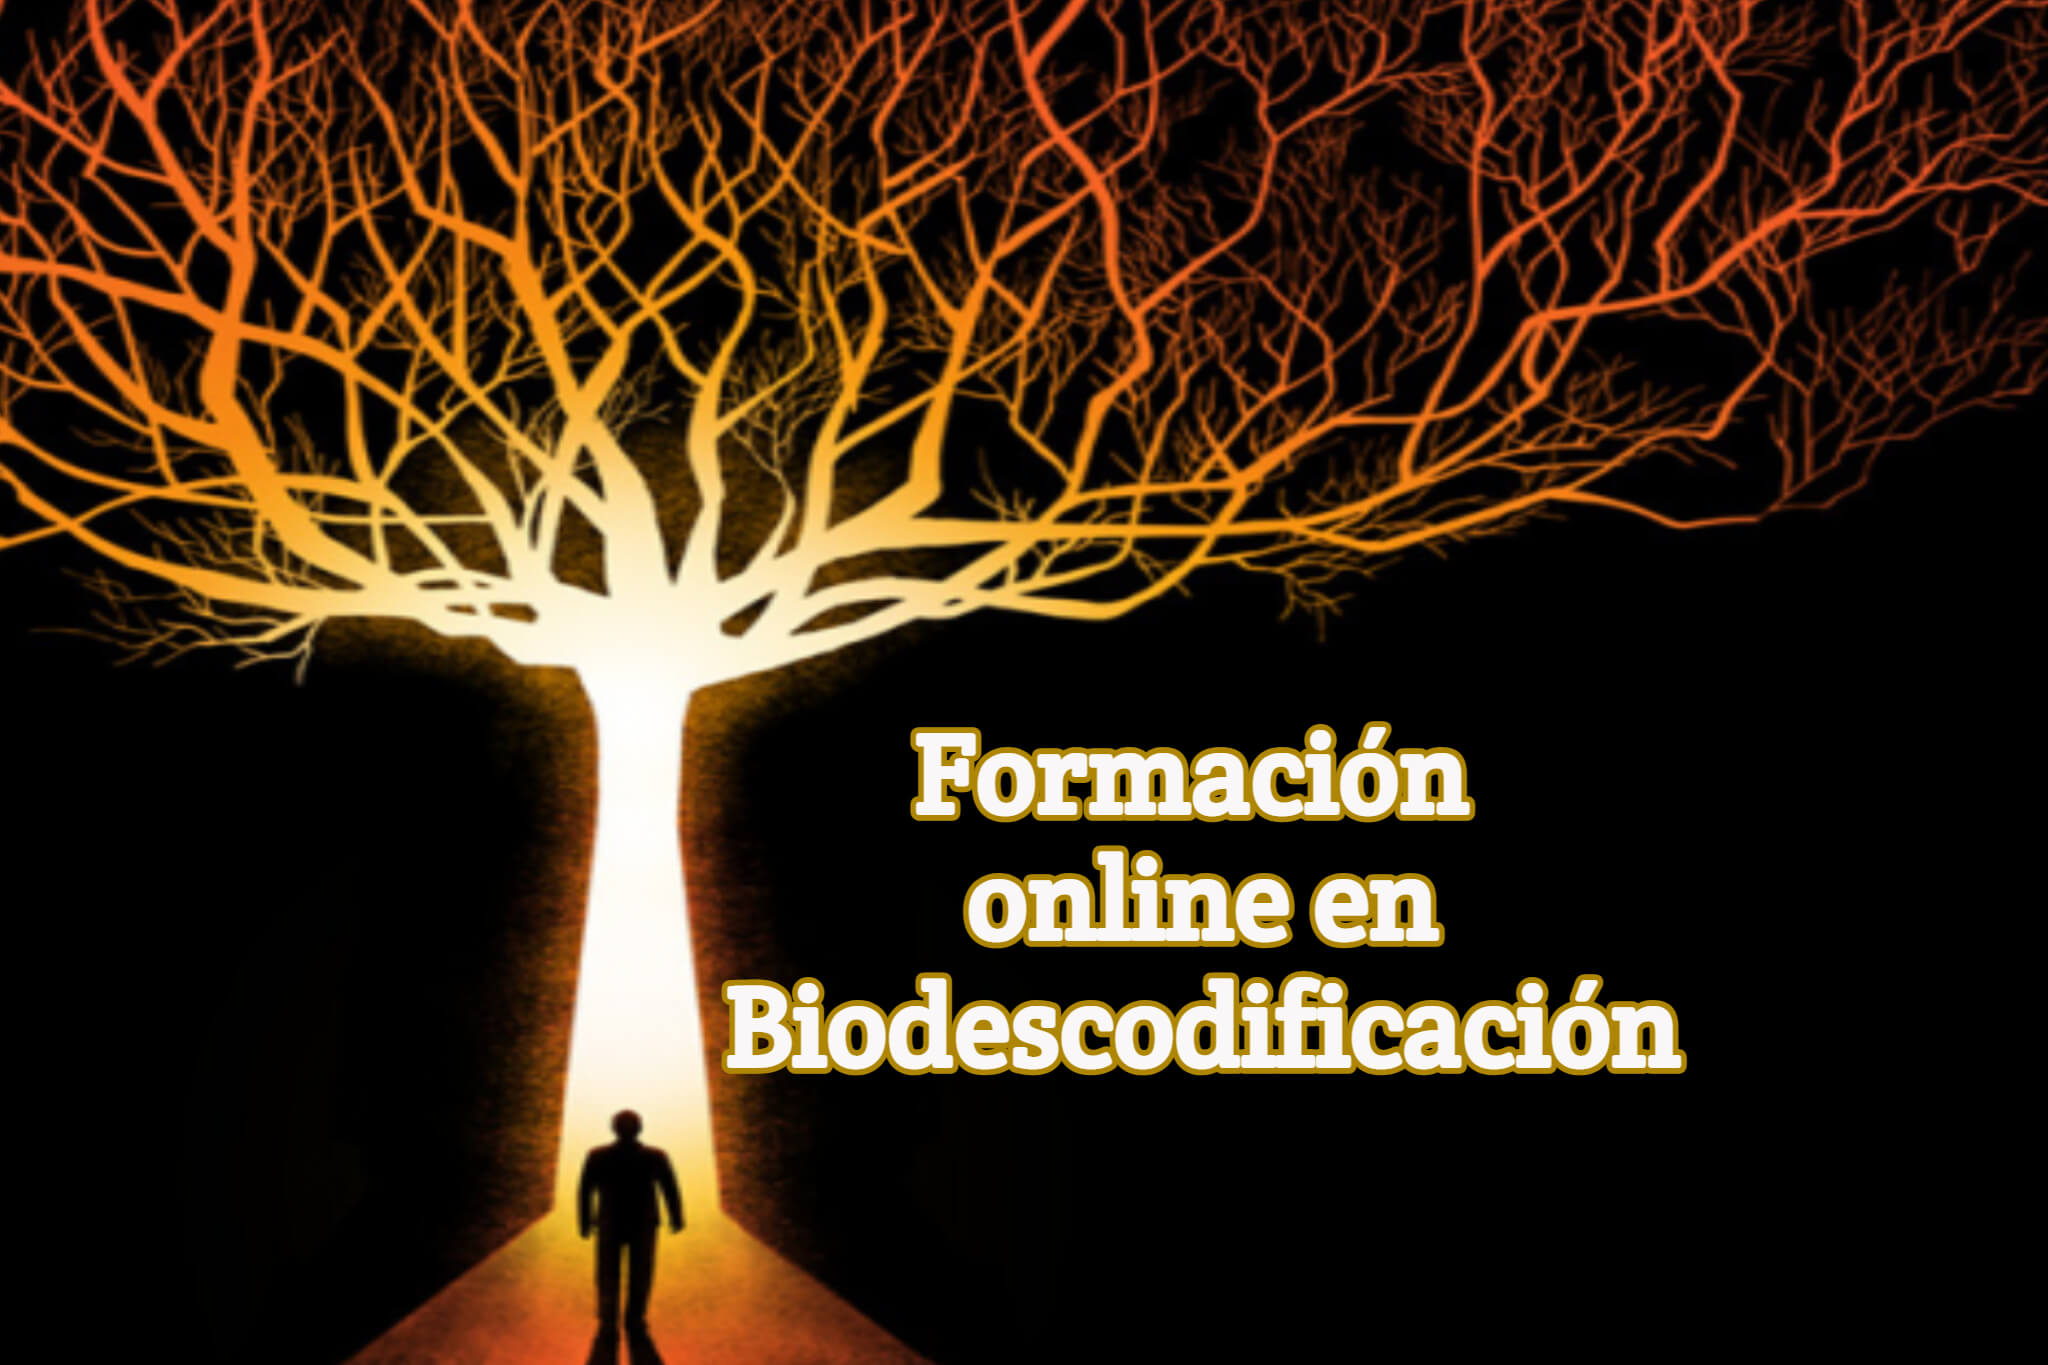 Formacion en biodescodificación